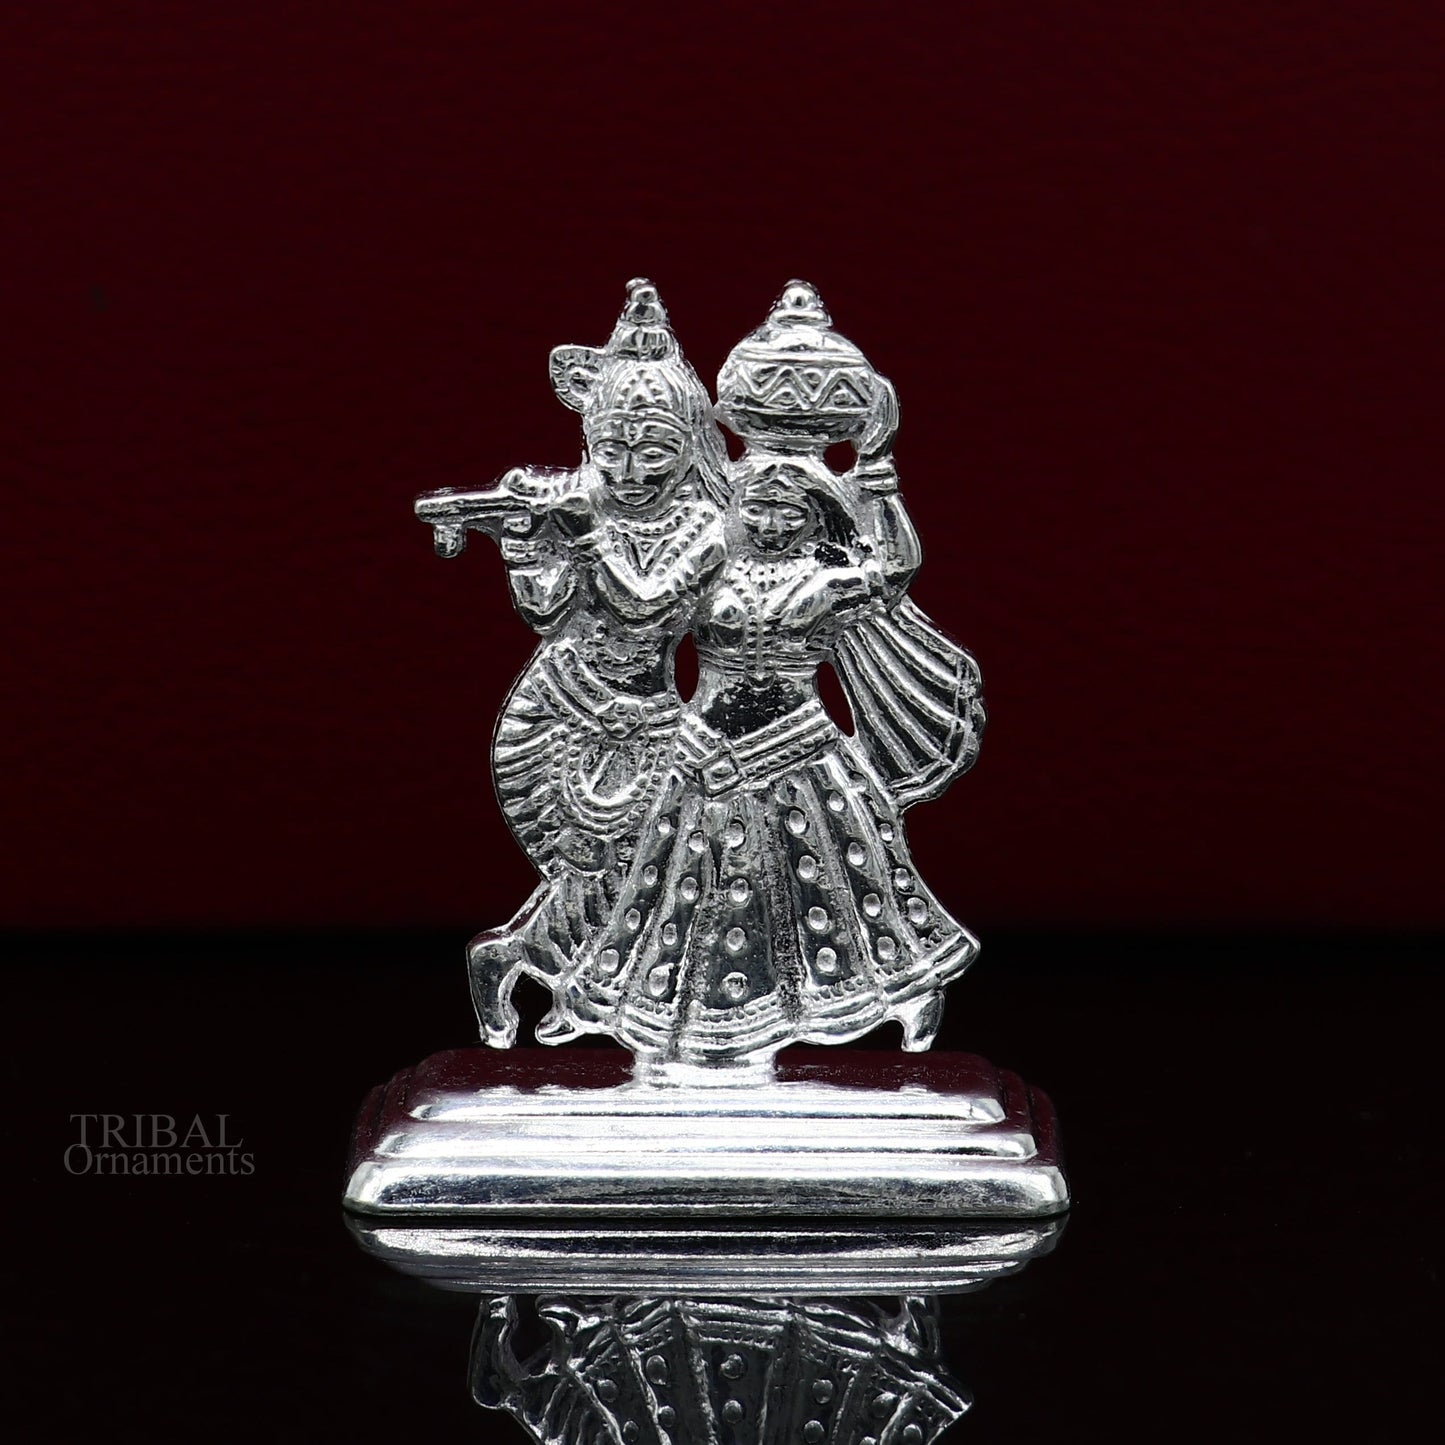 Hindu idol Radha krishna tiny statue, amazing Rasleela dancing krishna and Radha, lord krishna figurine, love article to gift her art491 - TRIBAL ORNAMENTS